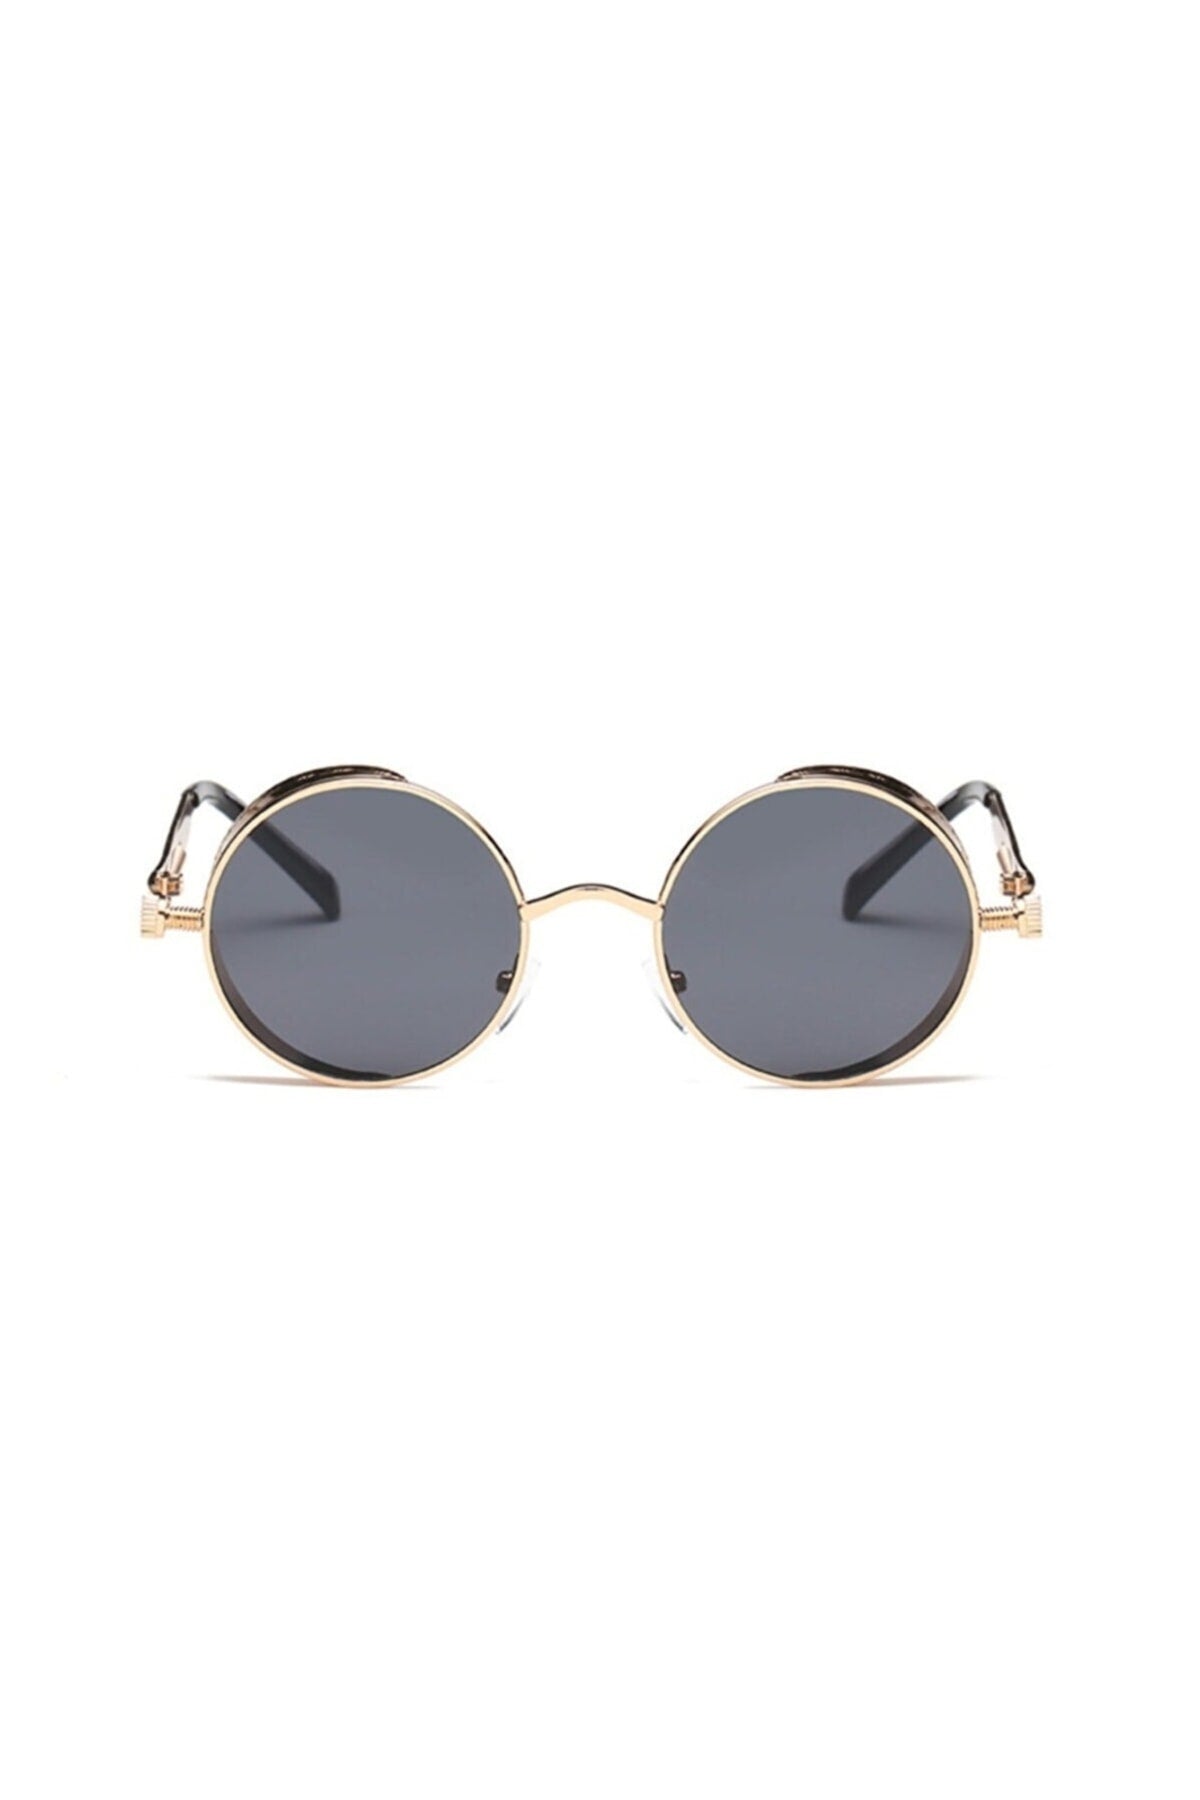 Vintage Steampunk Gothic Style Round Sunglasses